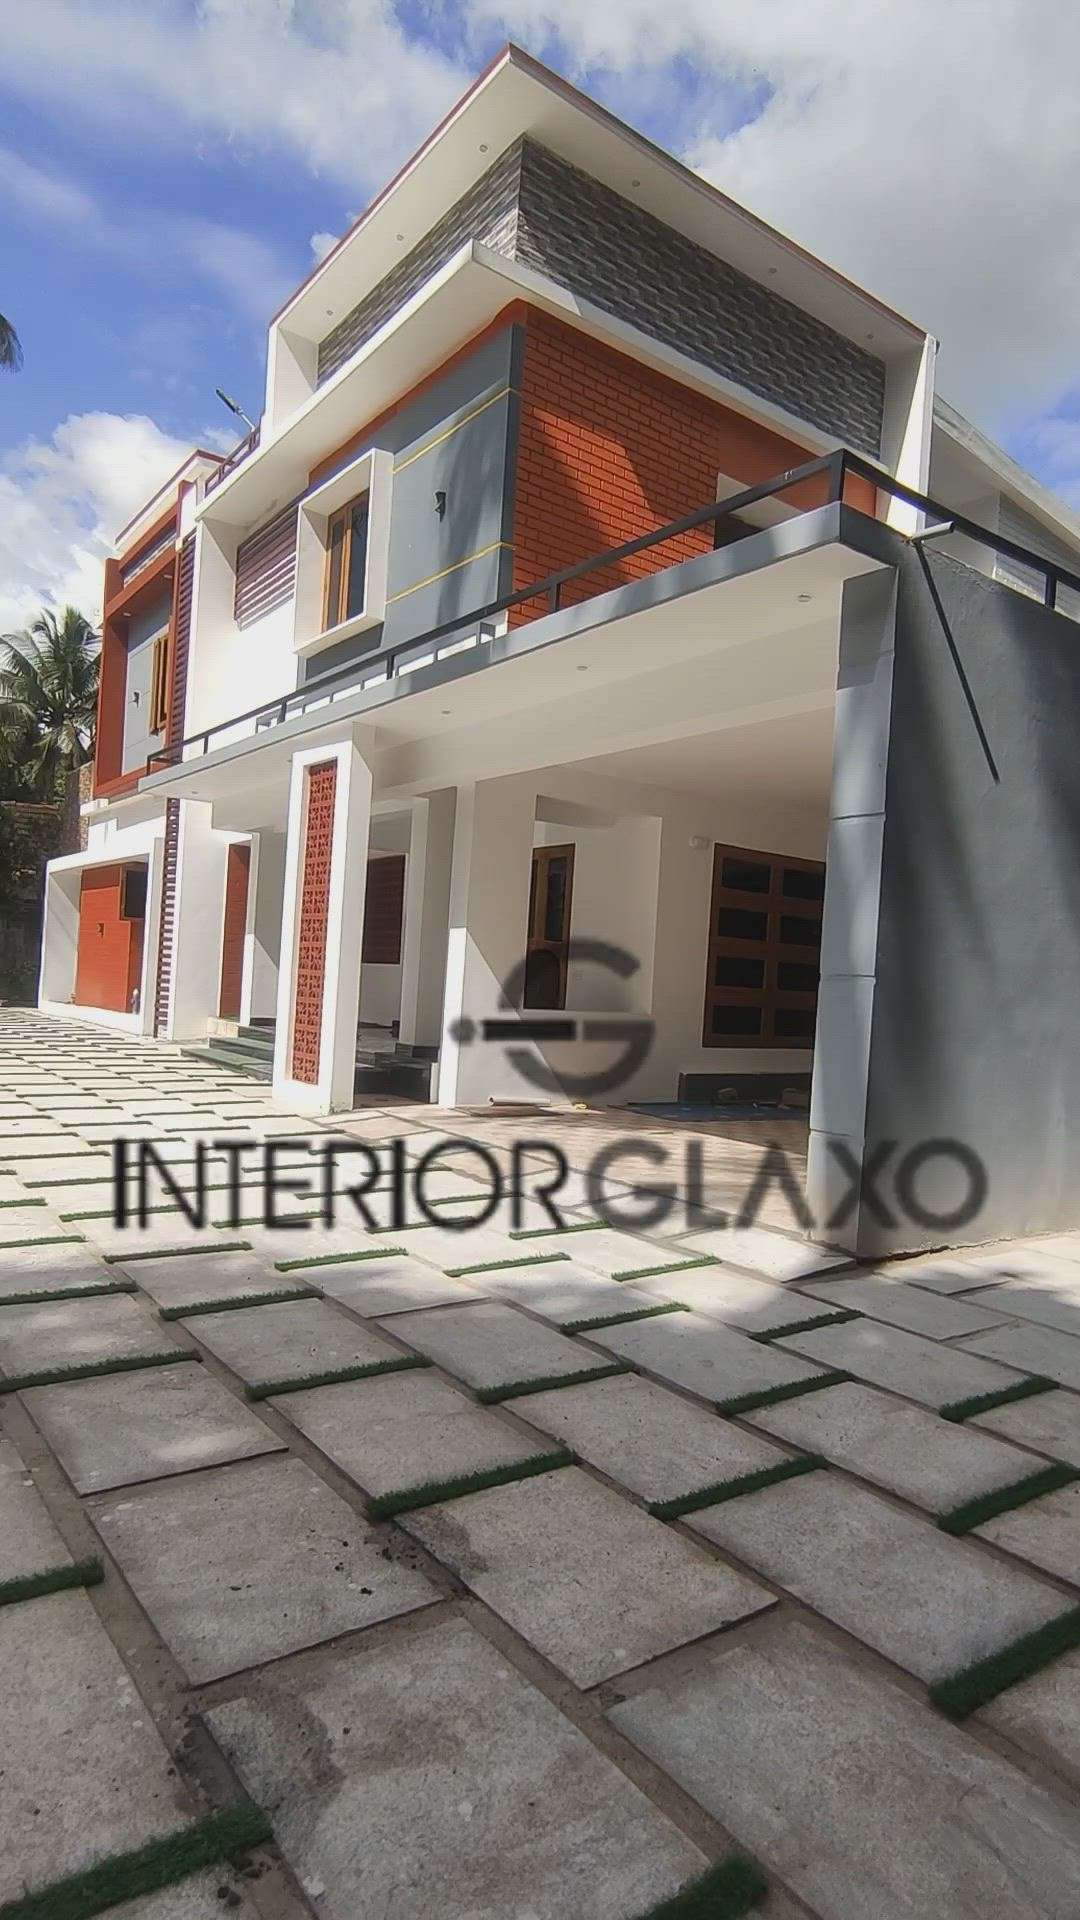 #new home #InteriorDesigner #Architectural&Interior
#naturalstones #OypsumCeiling